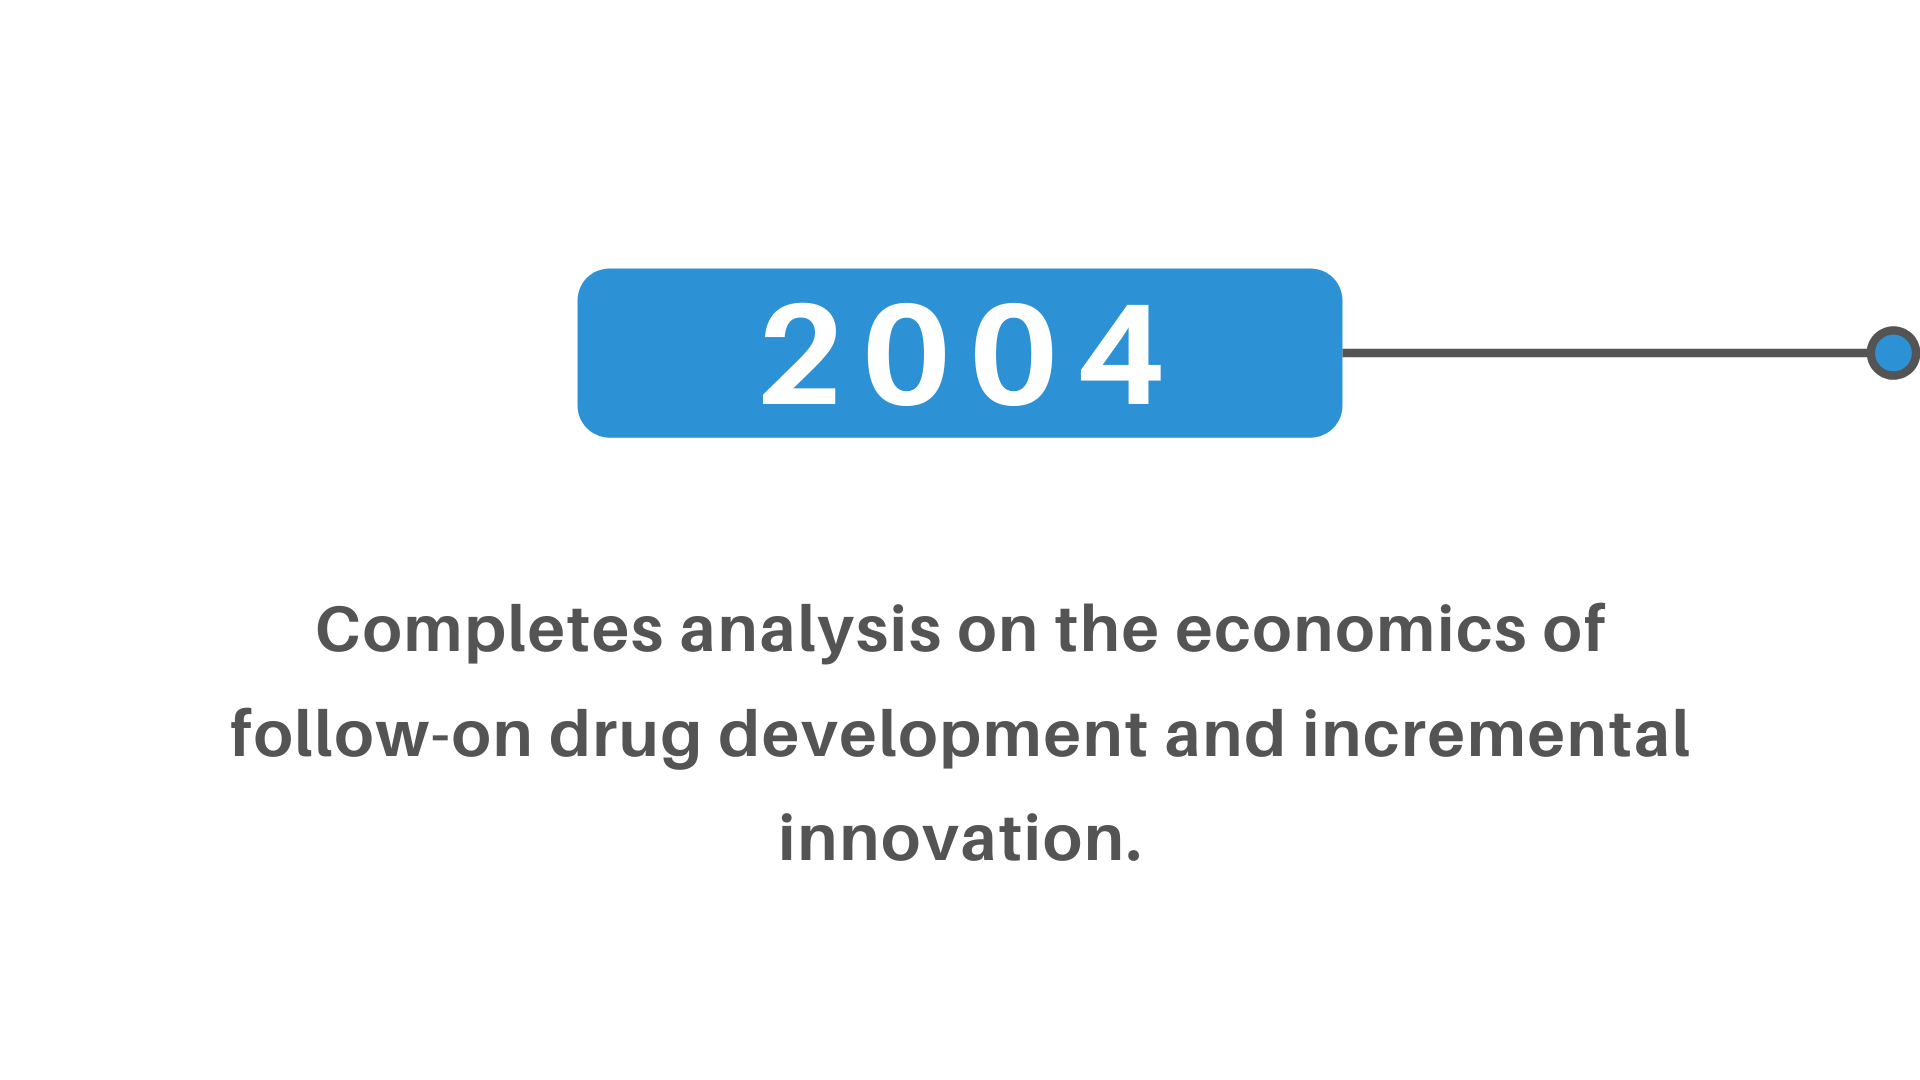 follow-on drug development incremental innovation